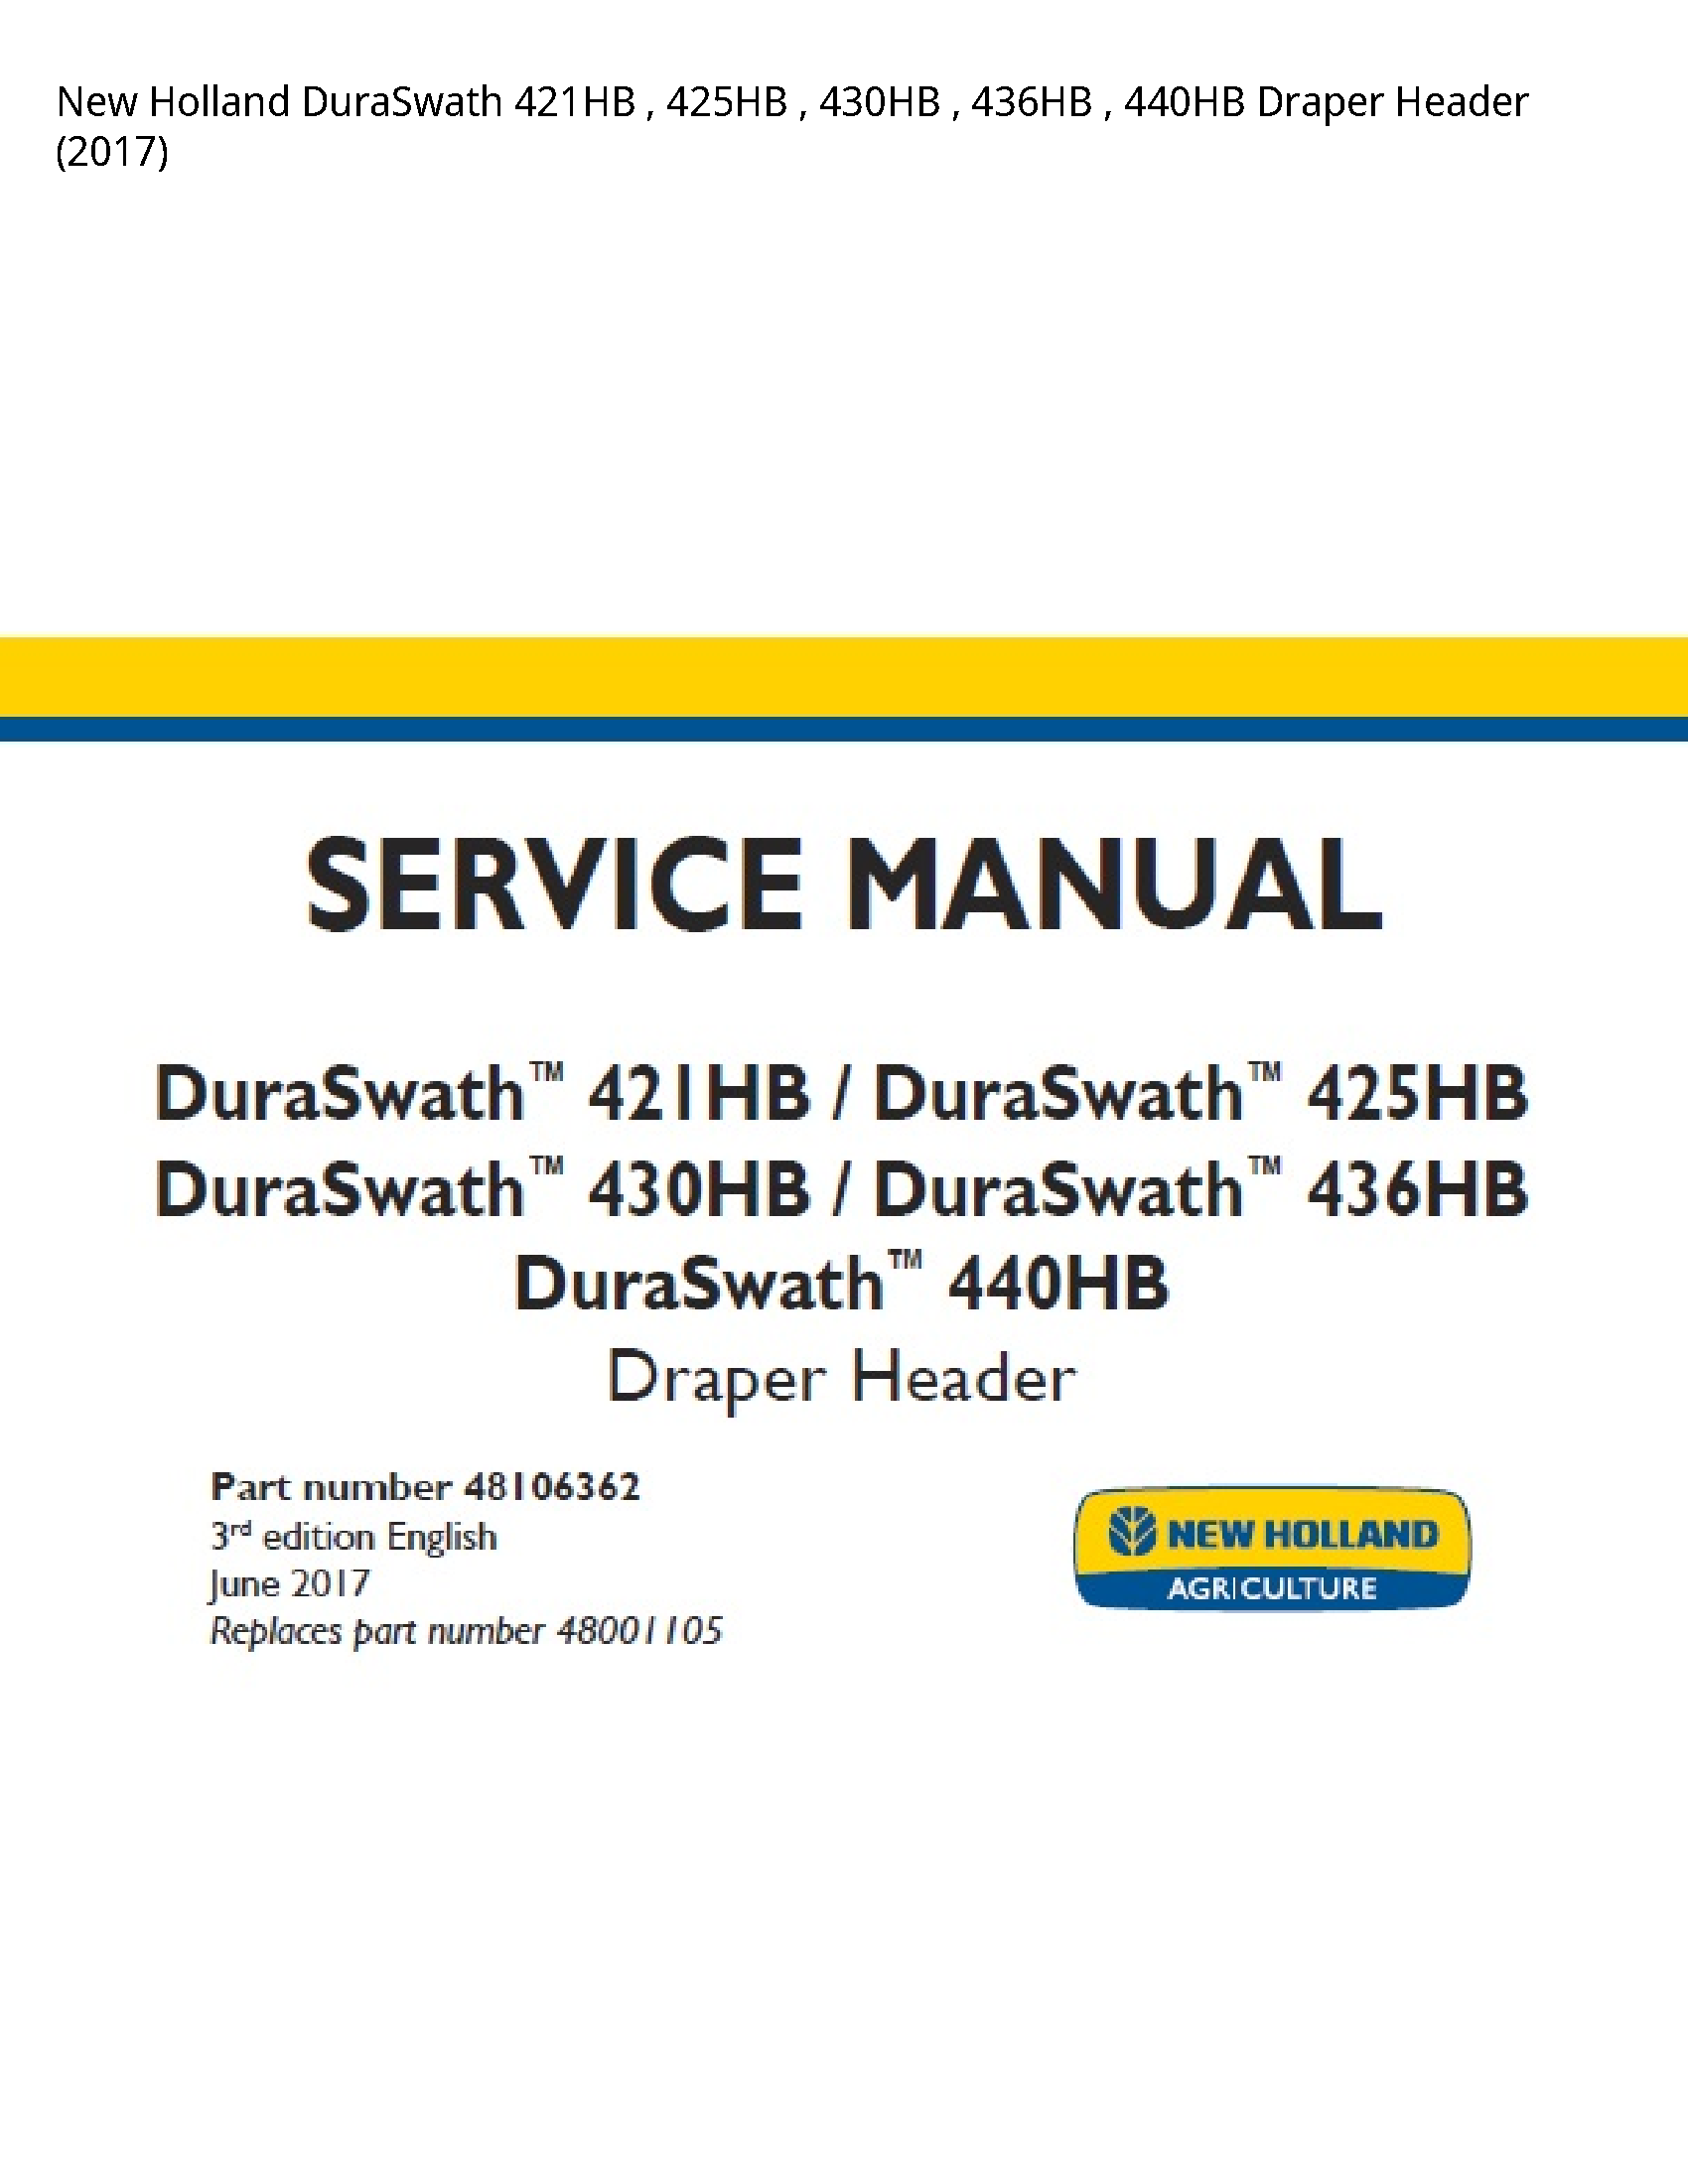 New Holland 421HB DuraSwath Draper Header manual